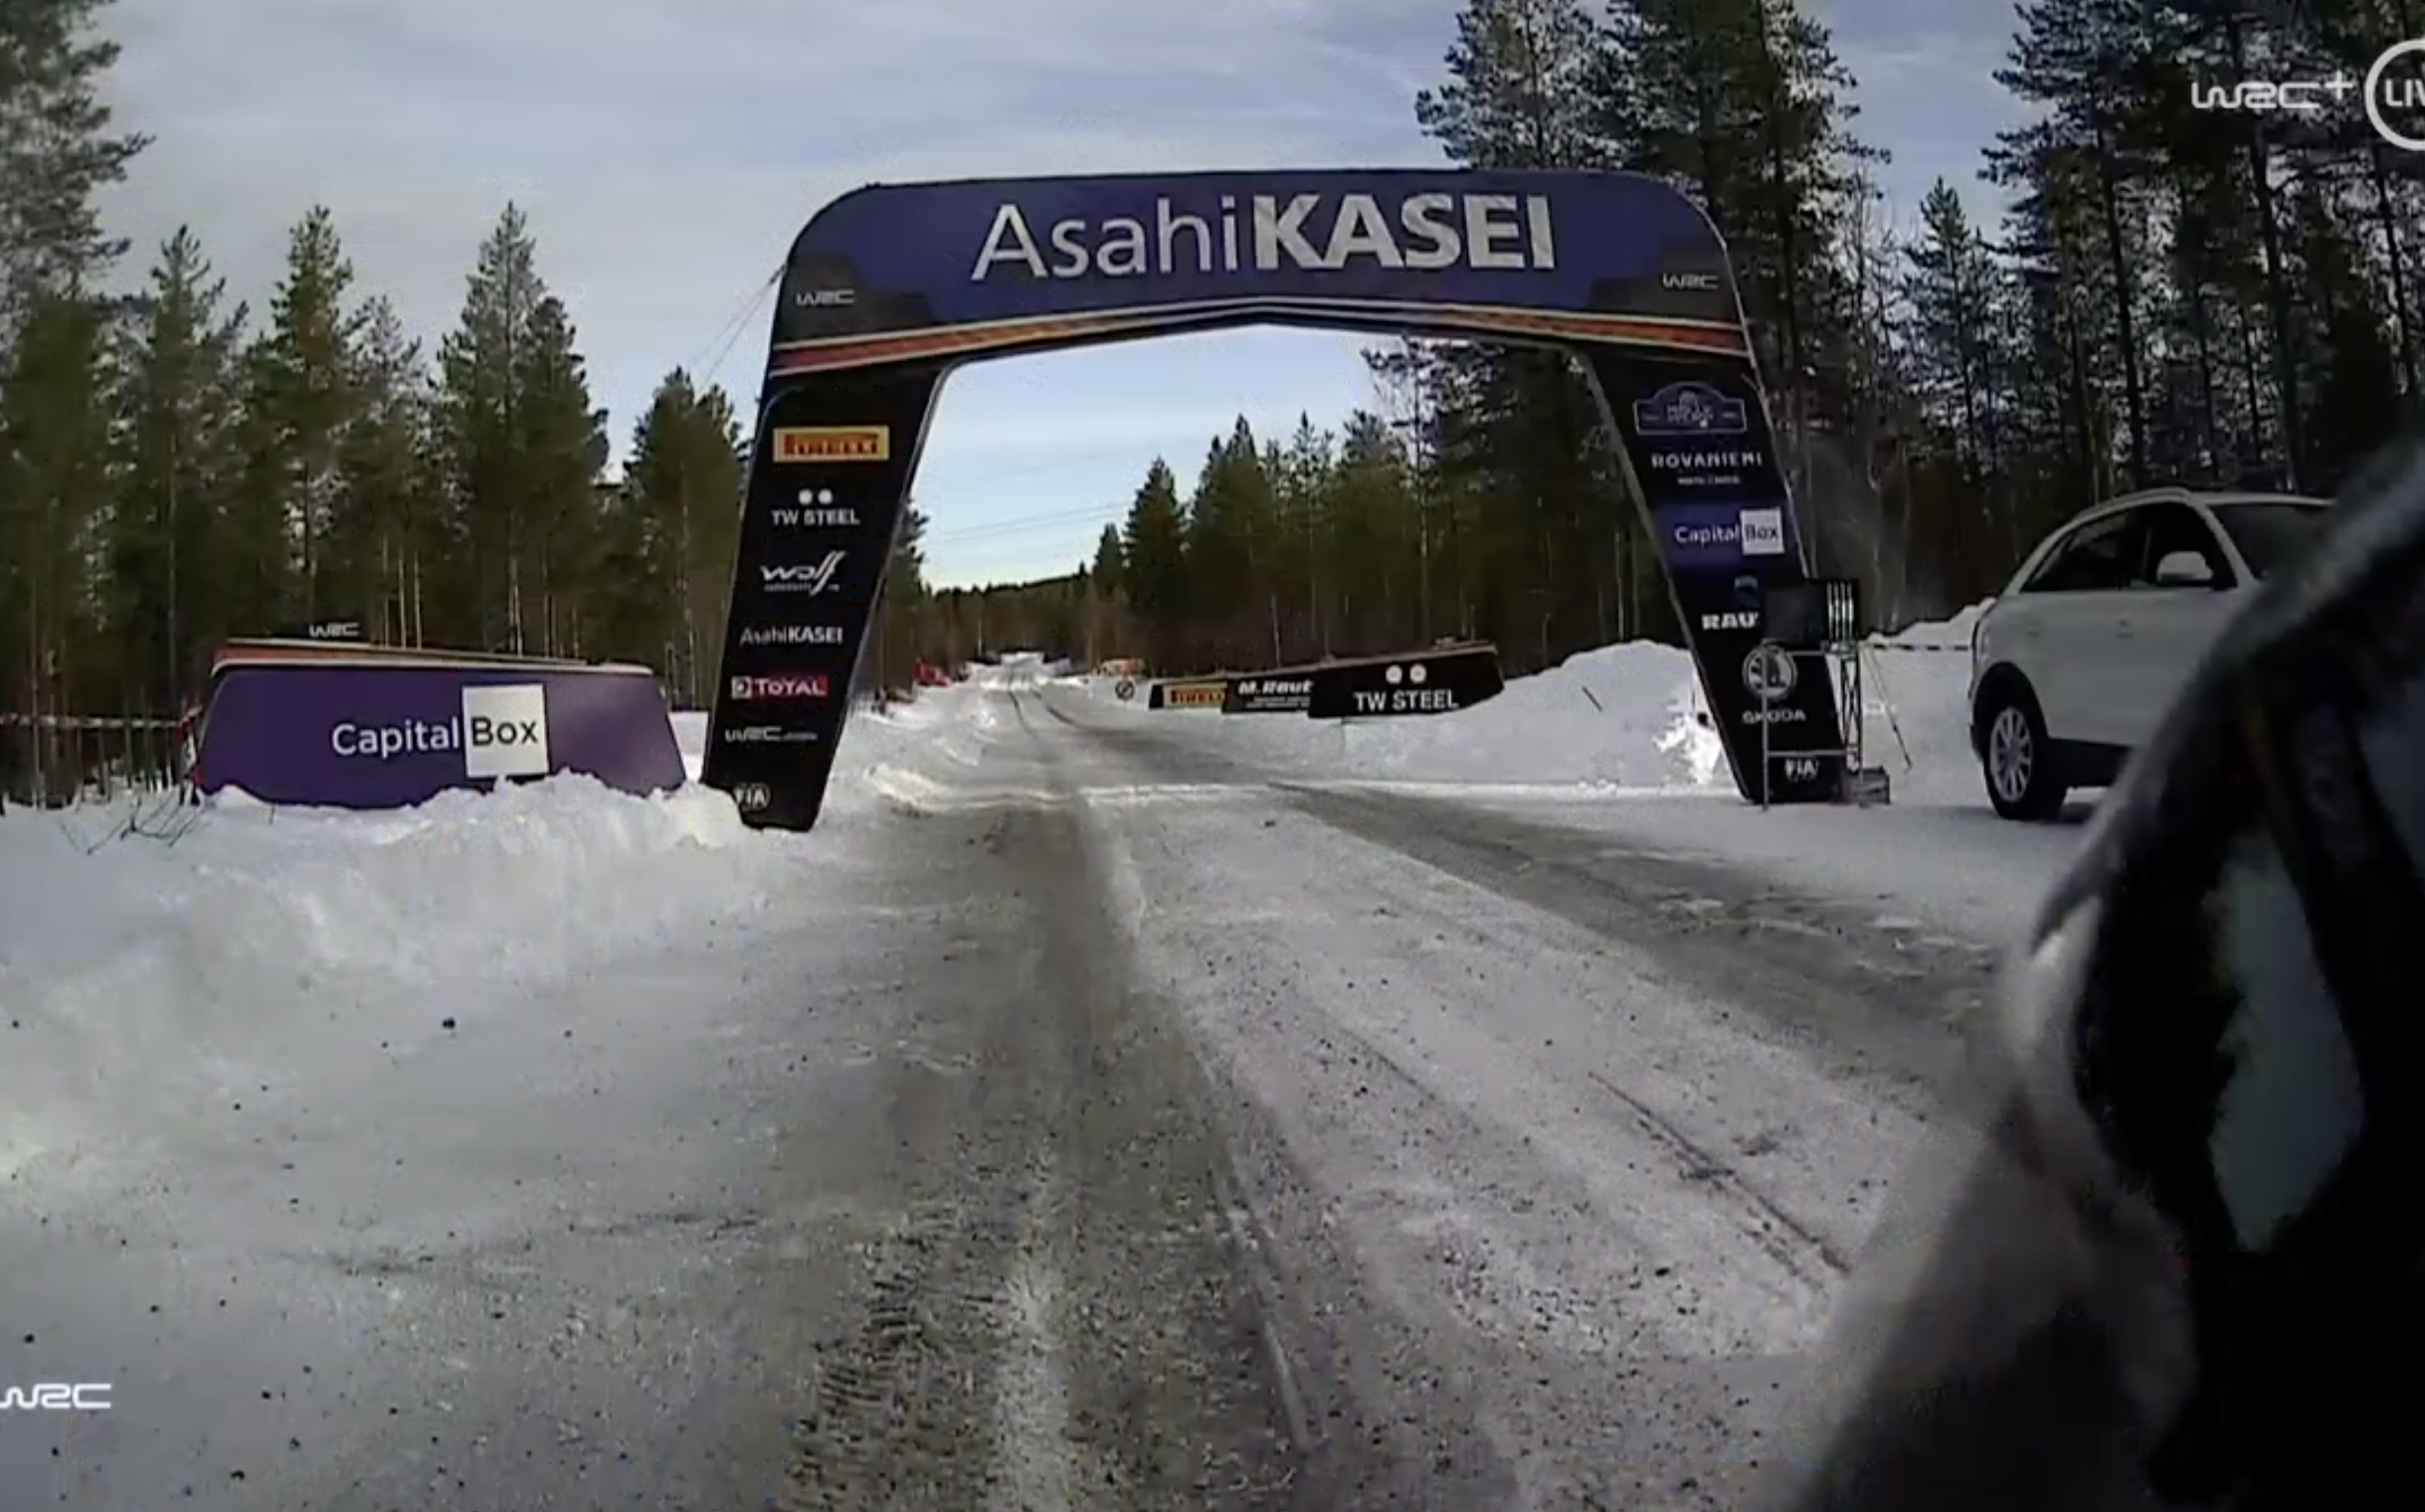 wrc - WRC: Arctic Rally Finland - Powered by CapitalBox [26-28 Febrero] - Página 7 Bertellistart